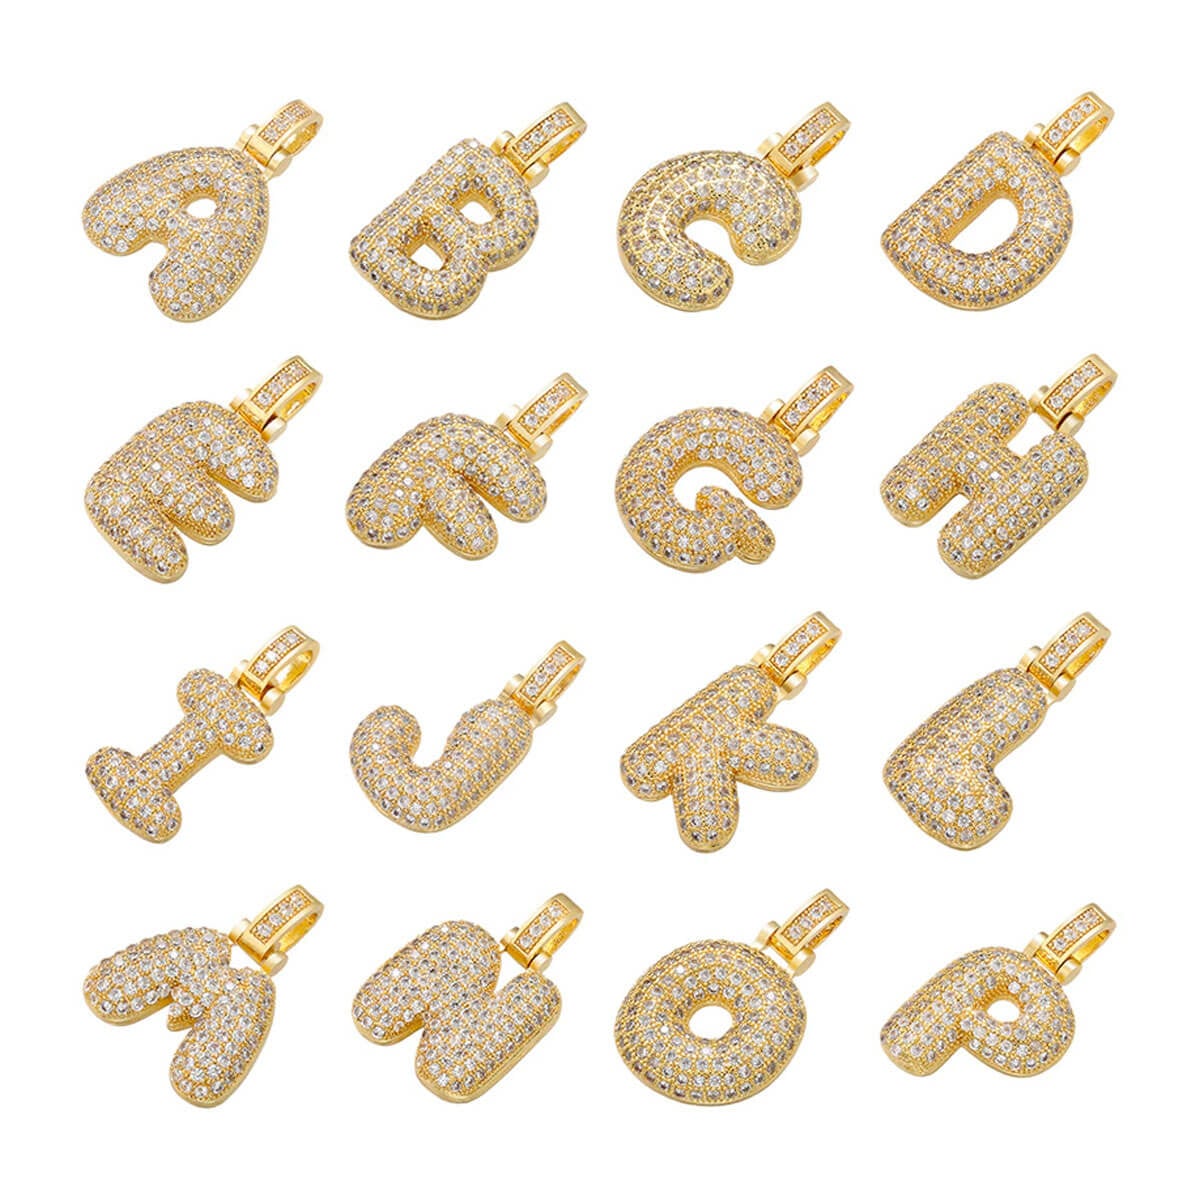 A Z Golden Alphabet Necklace Cover